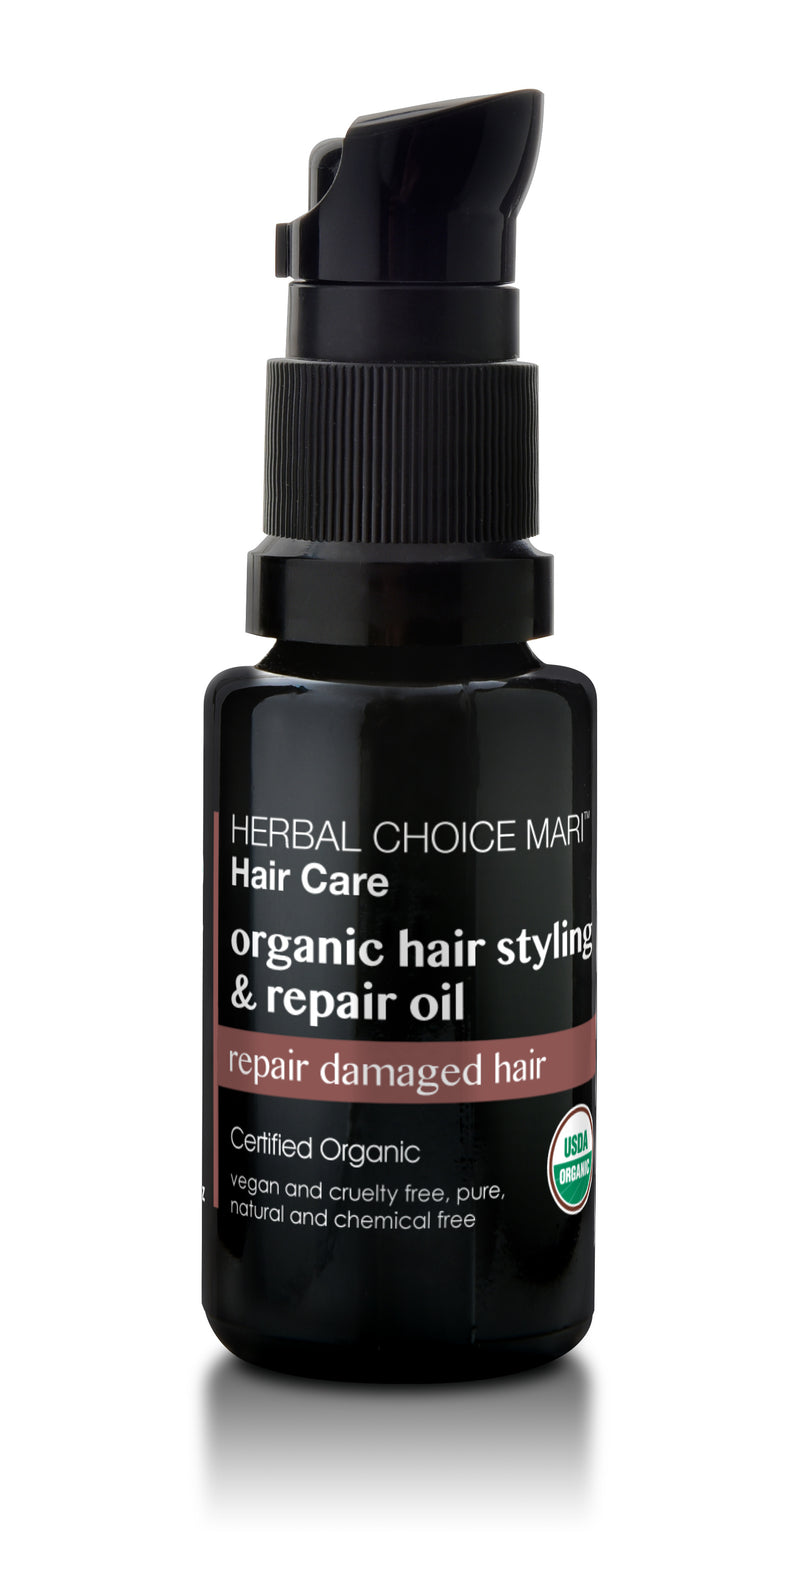 Herbal Choice Mari Organic Hair Styling & Repair Oil - Herbal Choice Mari Organic Hair Styling & Repair Oil - Herbal Choice Mari Organic Hair Styling & Repair Oil